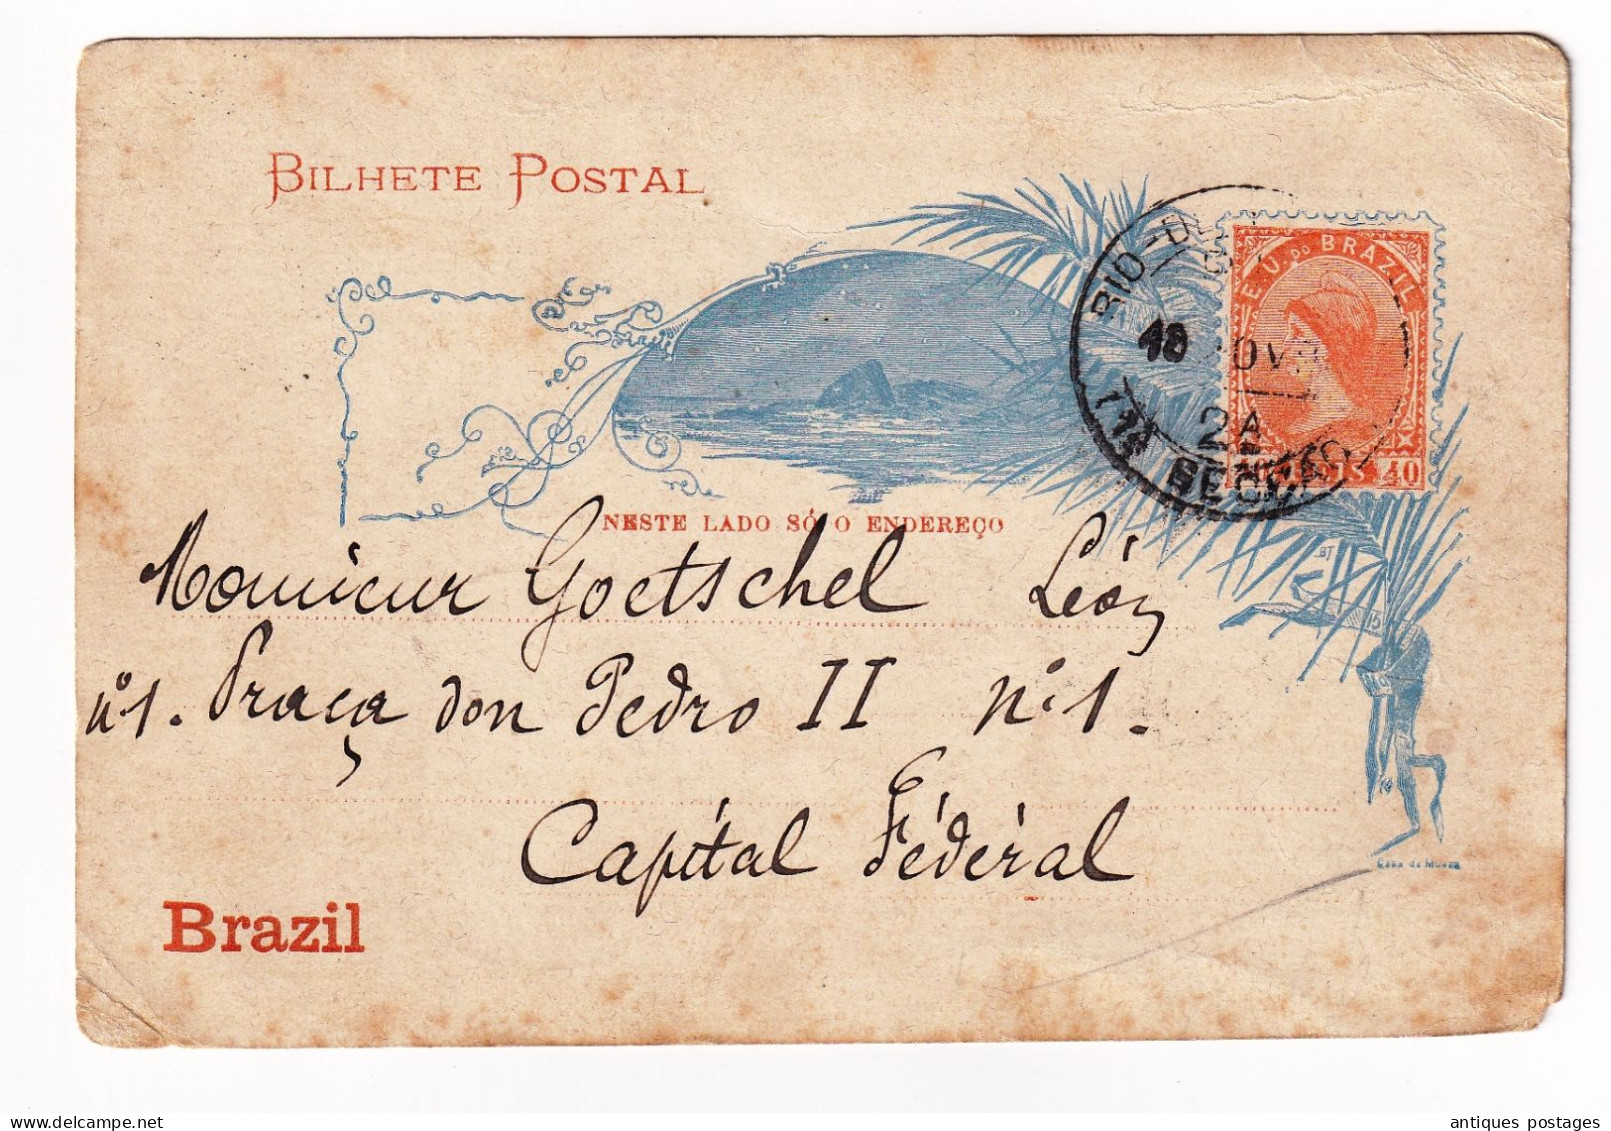 Bilhete Postal 1893 Rio De Janeiro Carte Postale Brésil Brazil Brasil Consulat De France Léon Goetschel - Covers & Documents